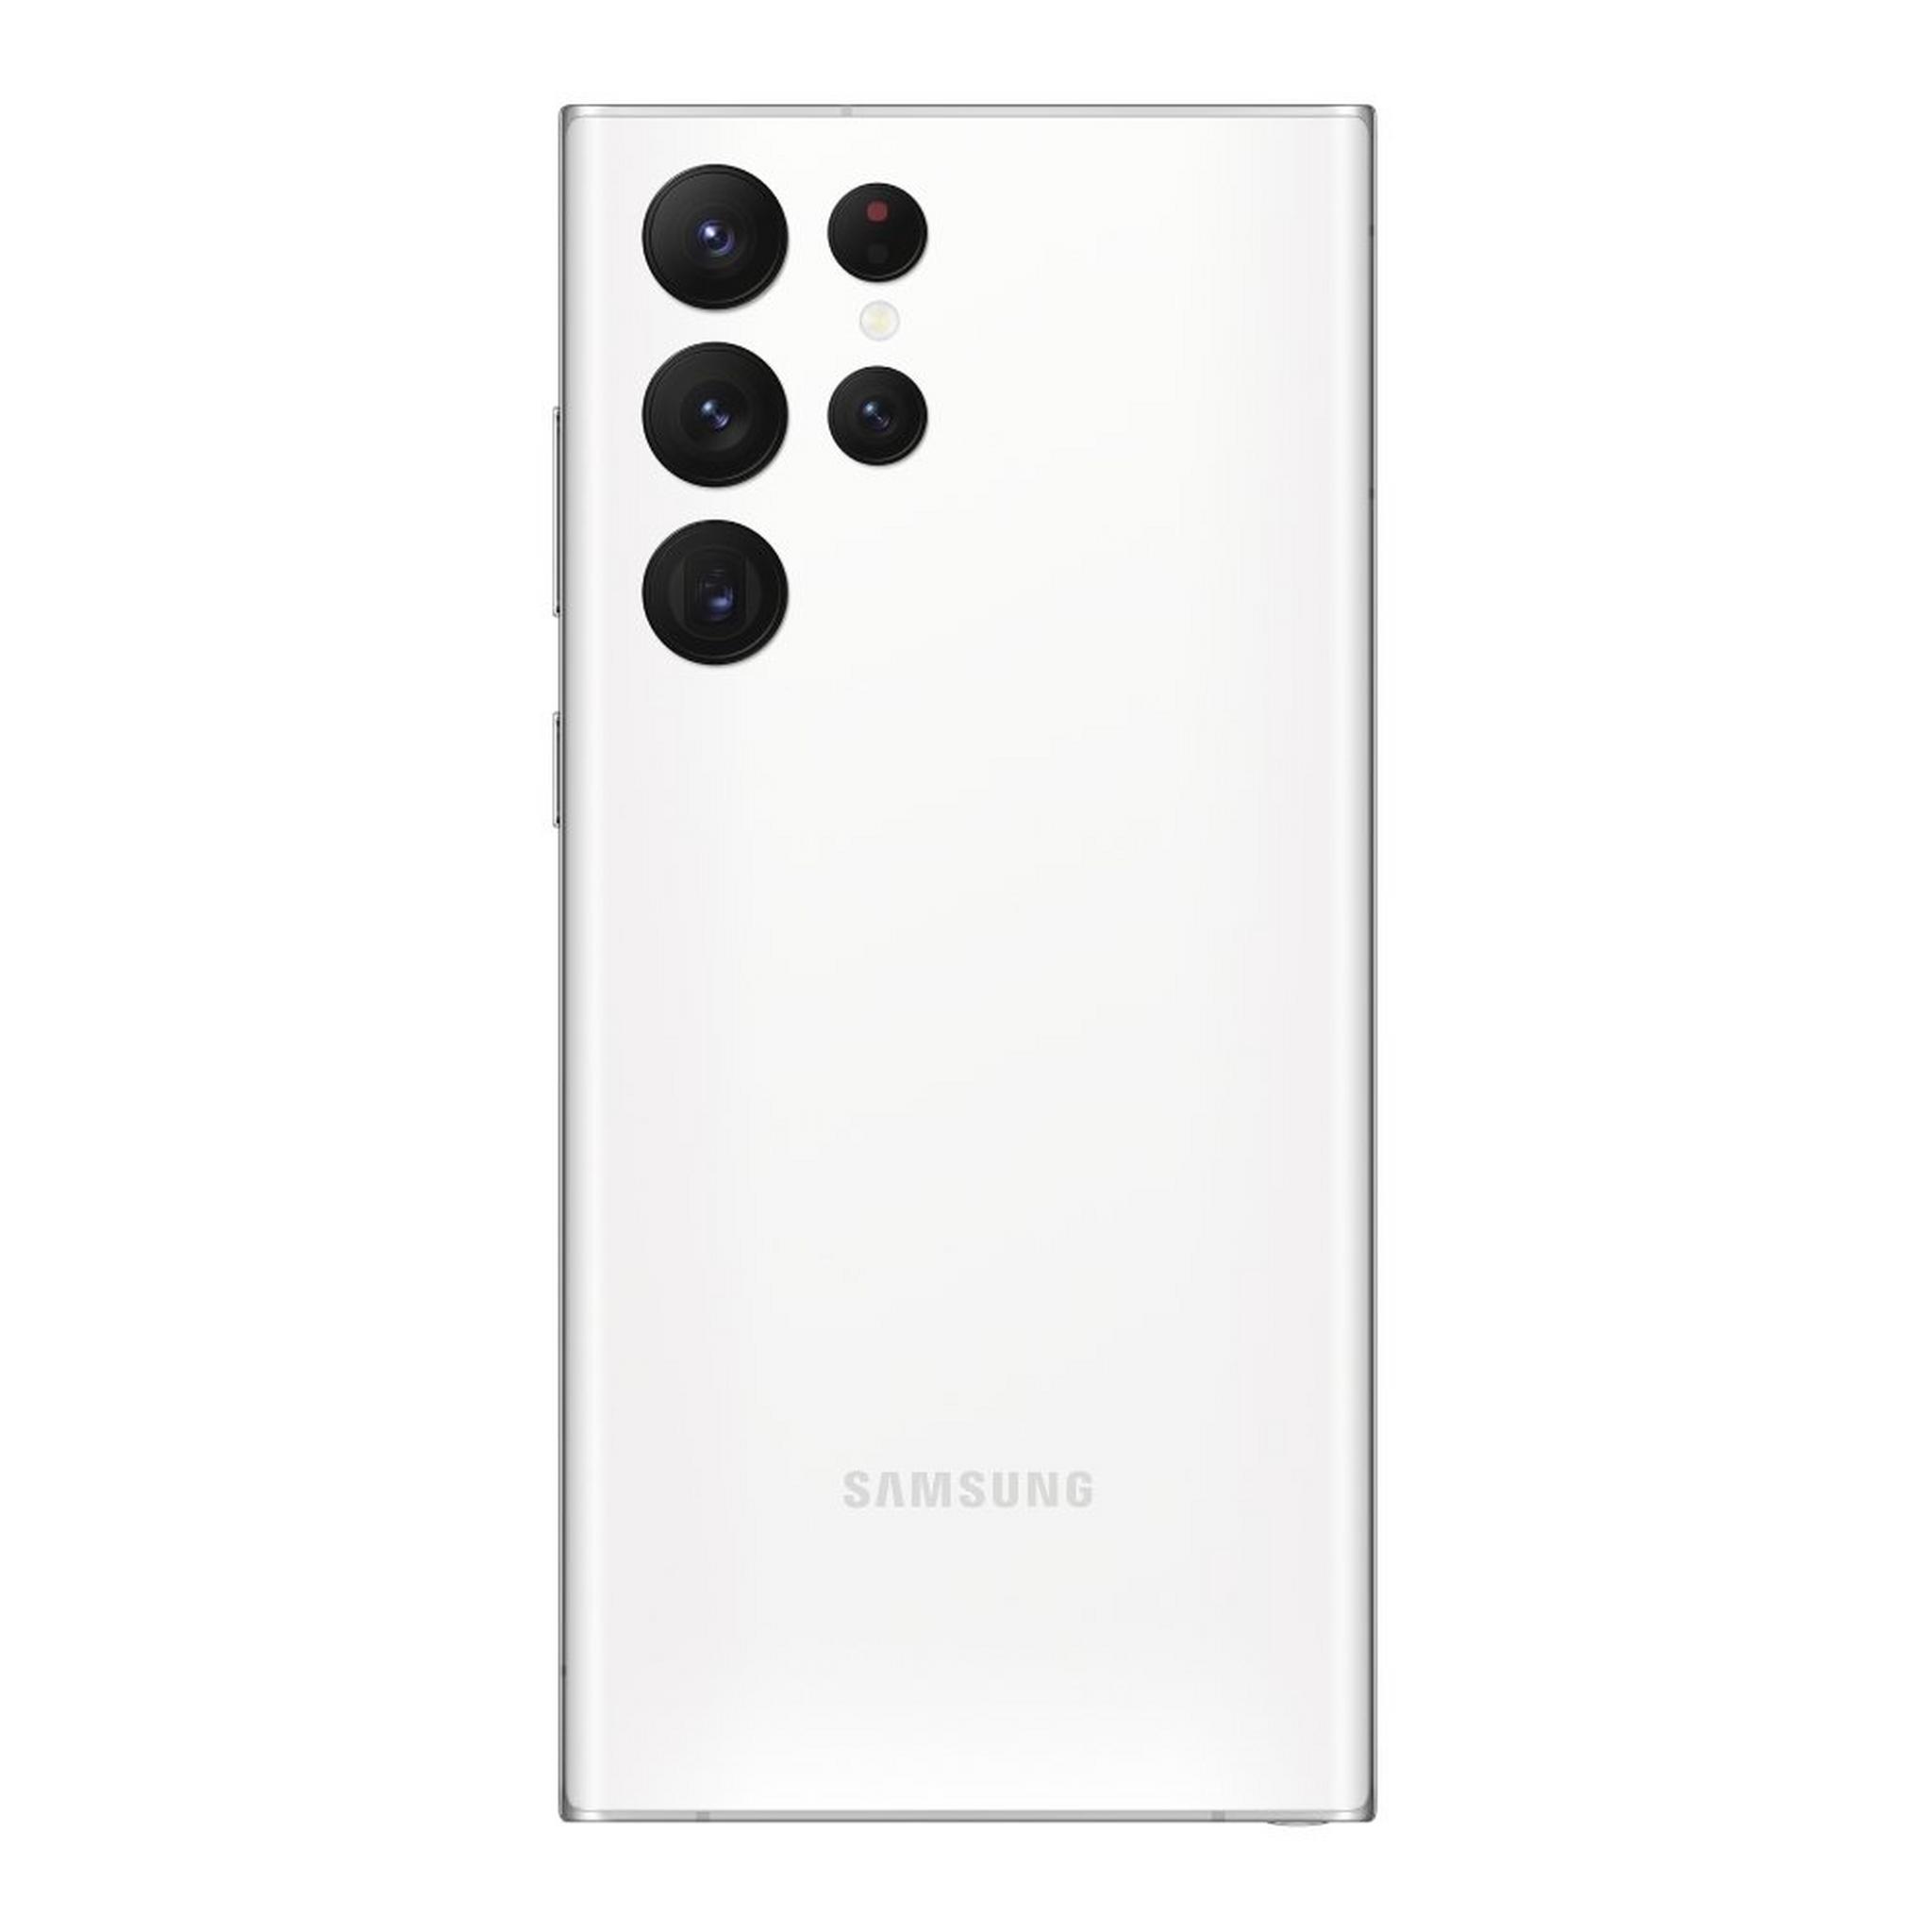 Samsung Electronics Develops Second-Generation SmartSSD Computational Storage Drive With ...